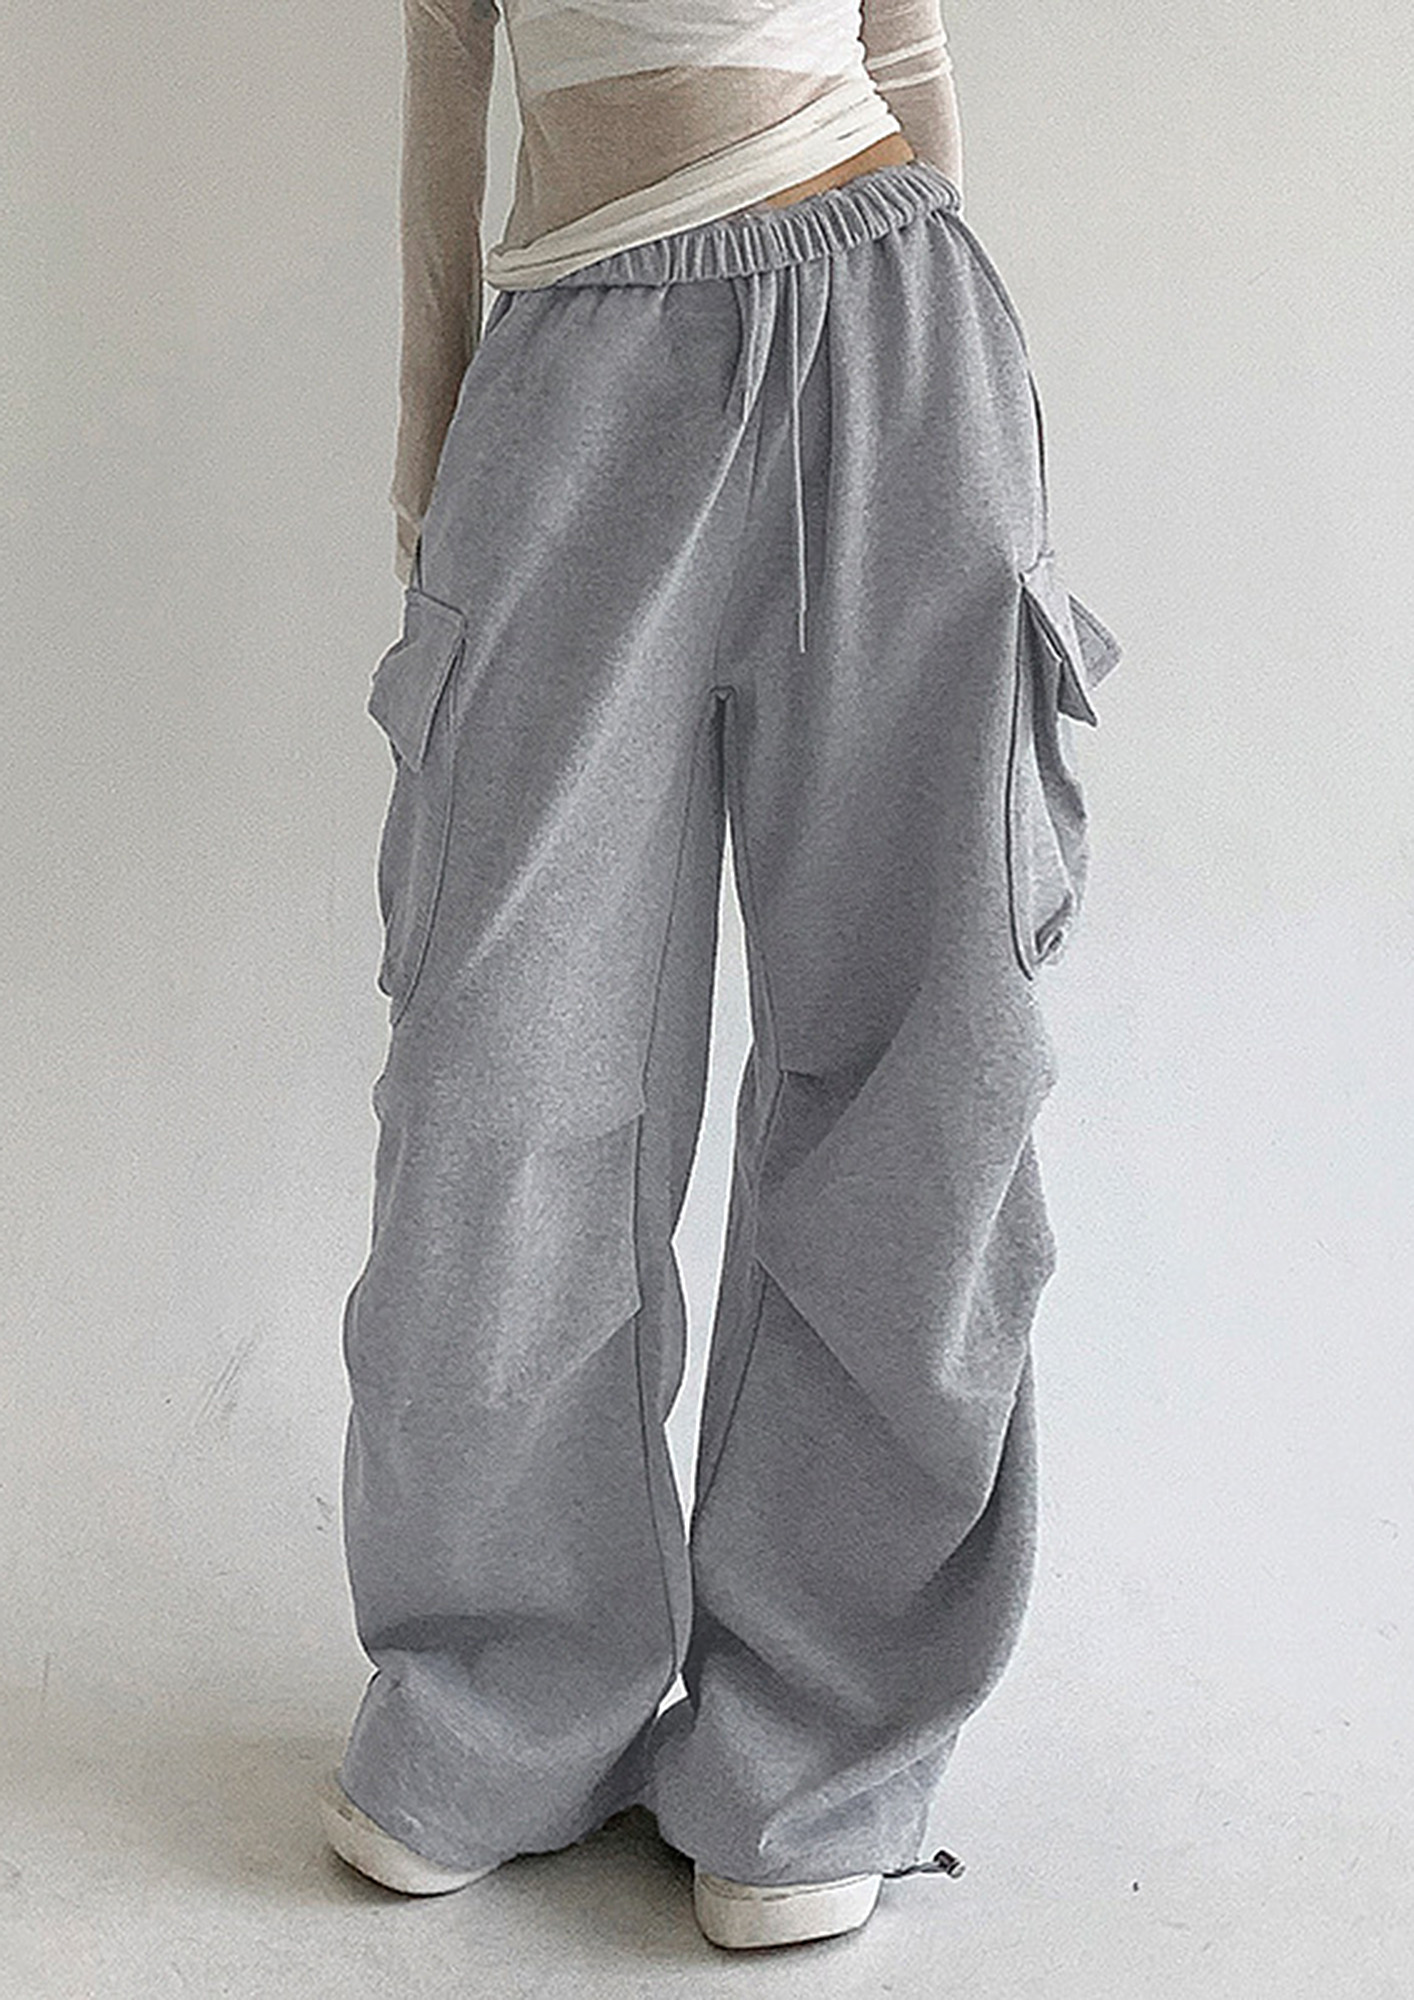 Men Casual Cargo Pants Trousers Straight Bottoms Multi Pockets Outdoor Work  Wear | eBay